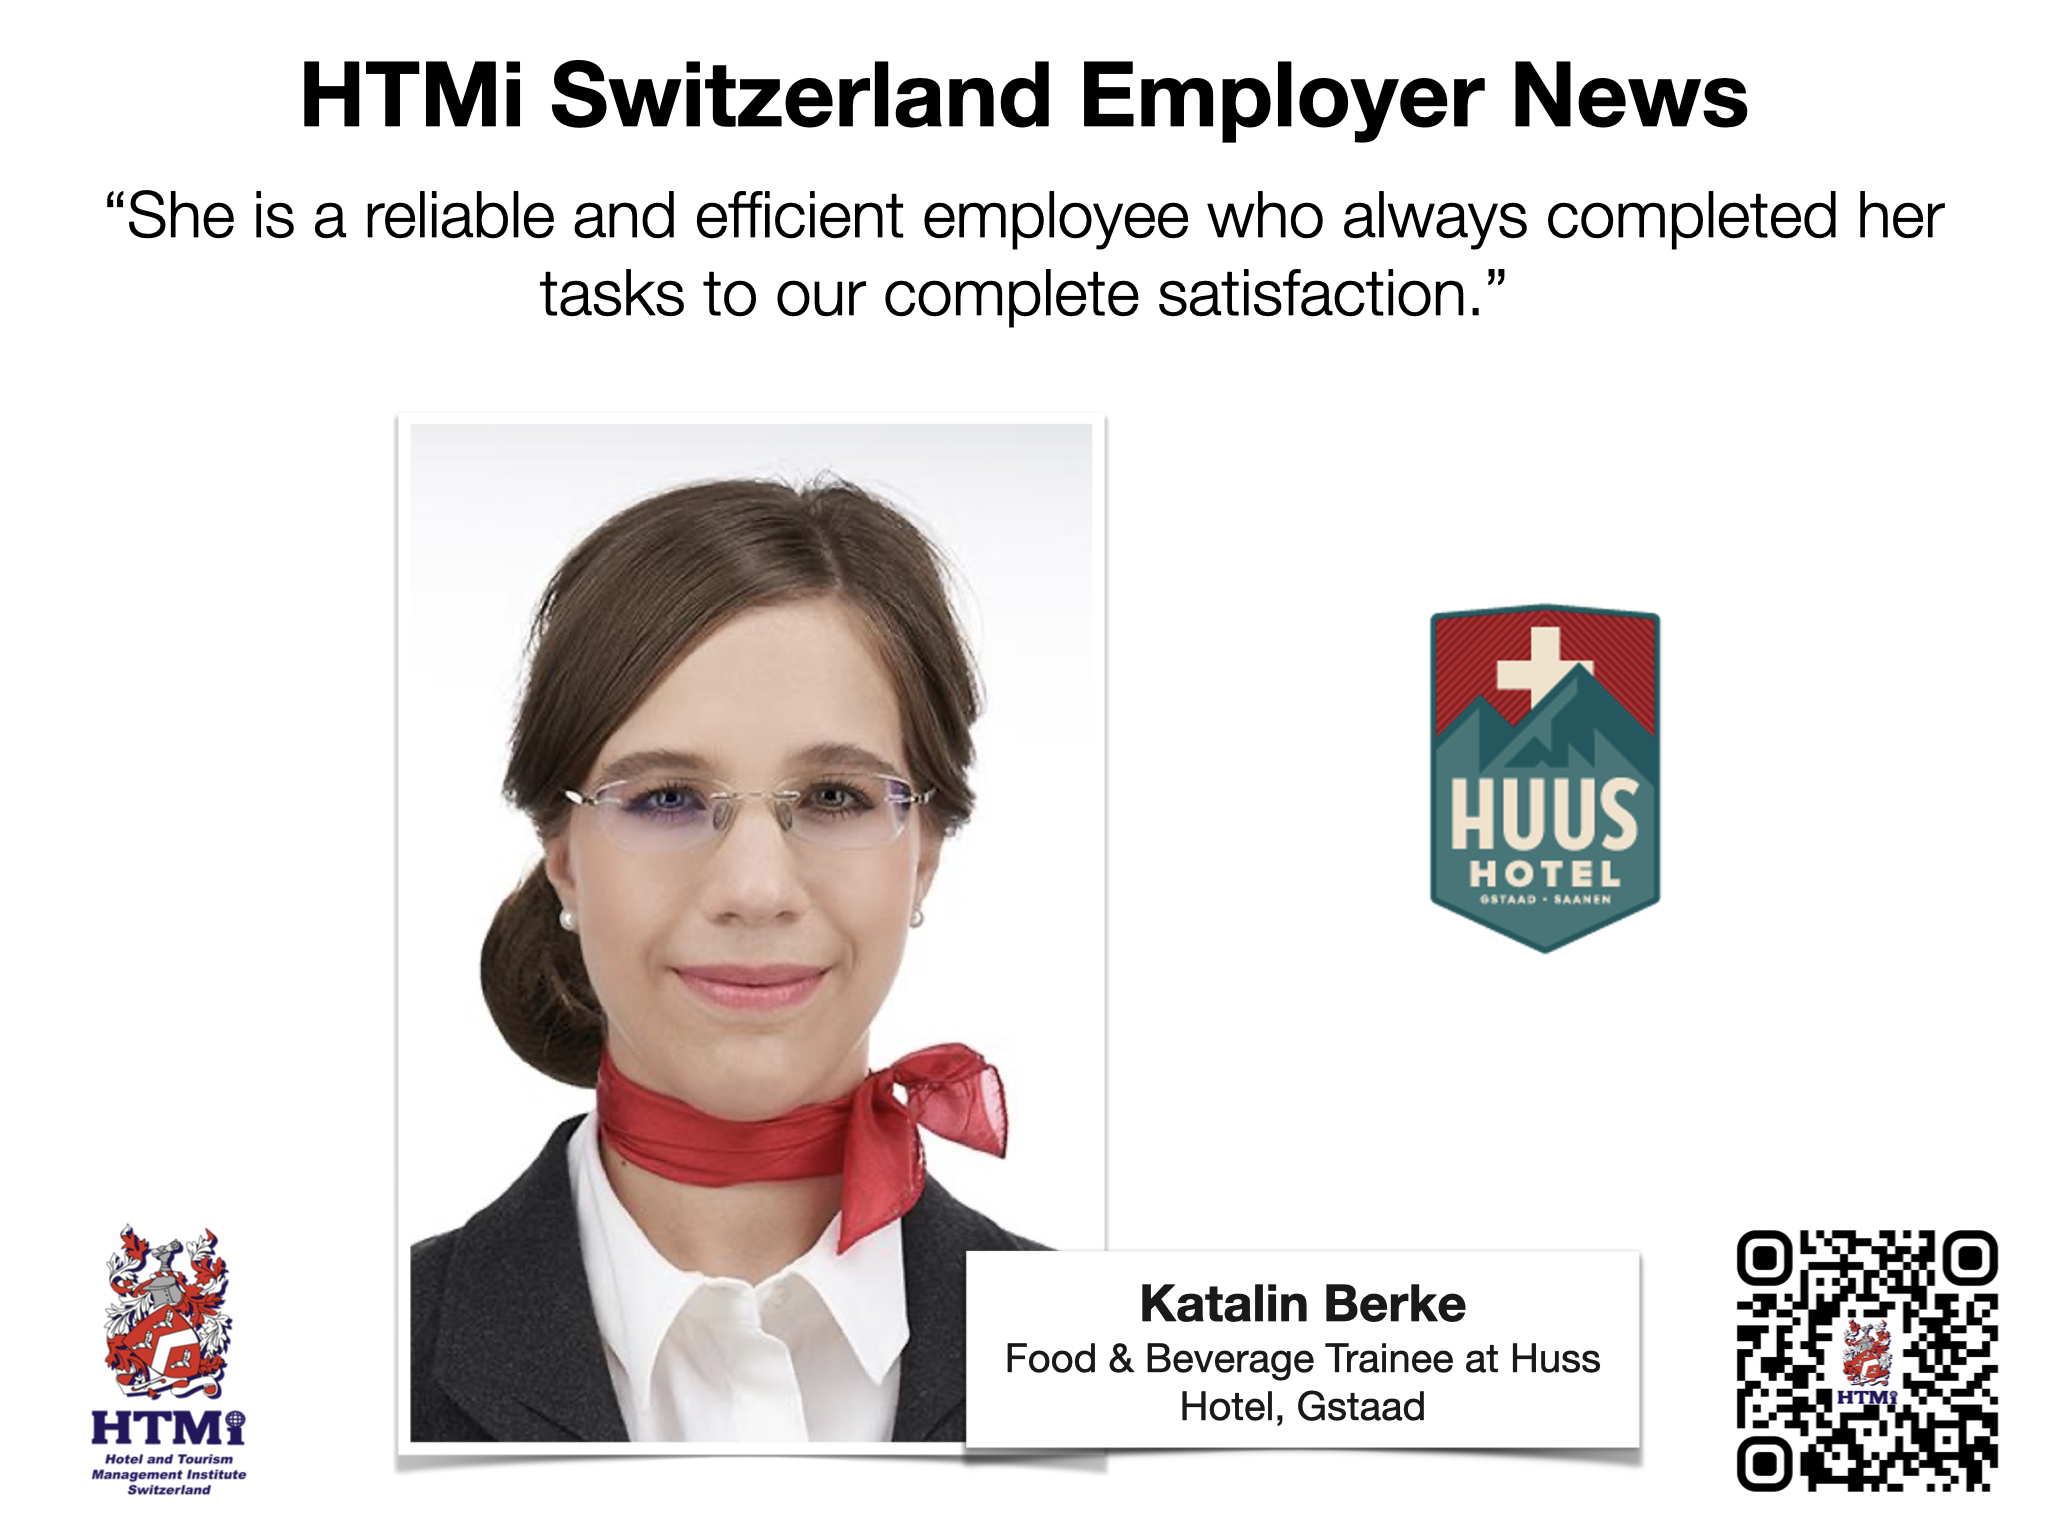 Katalin Berke - Food & Beverage Trainee at Huss Hotel, Gstaad - HTMi Switzerland Employer News